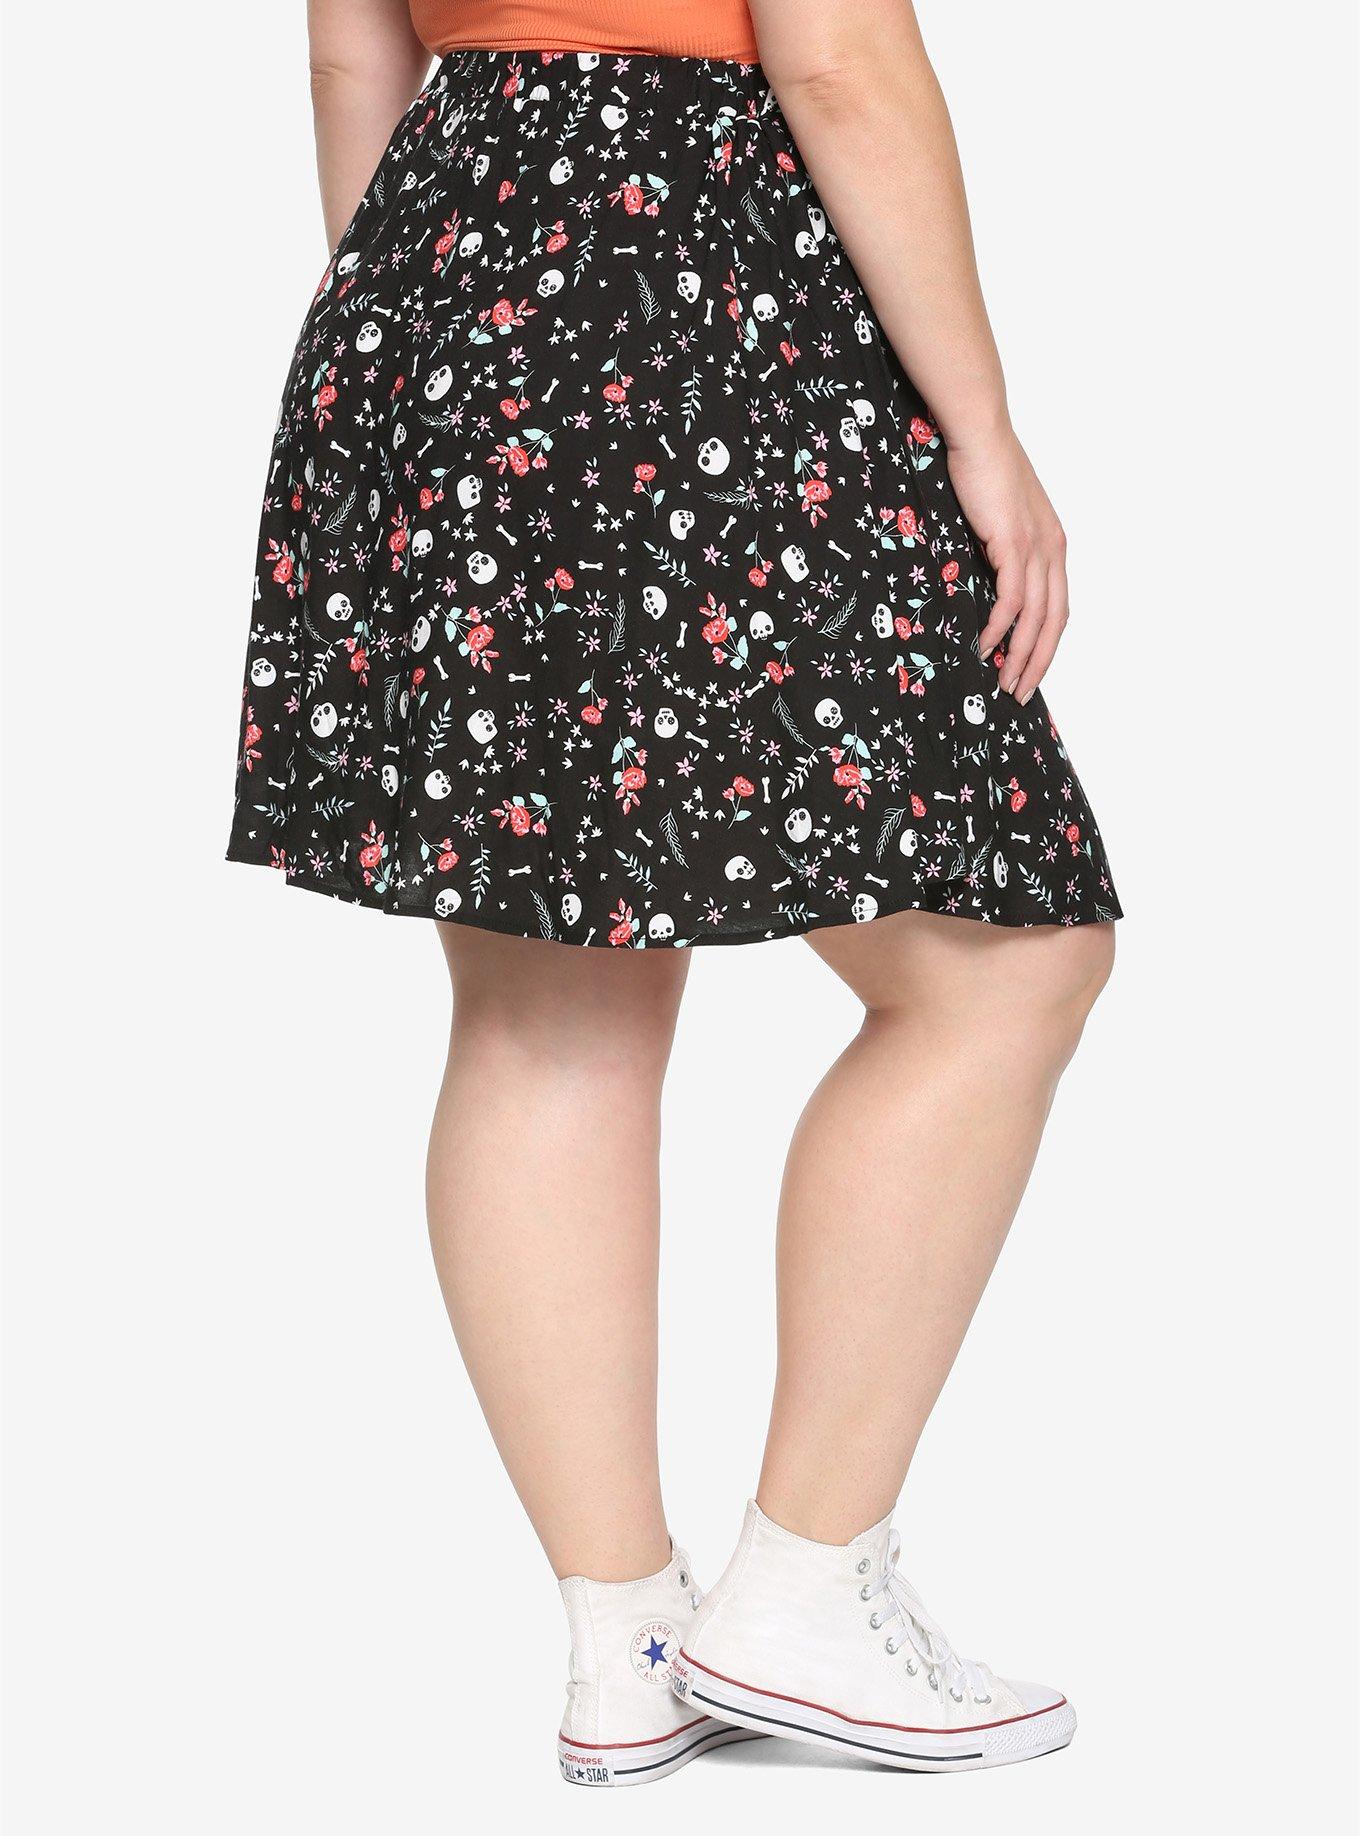 Ditsy Floral Skull Print Skirt Plus Size, FLORAL, alternate